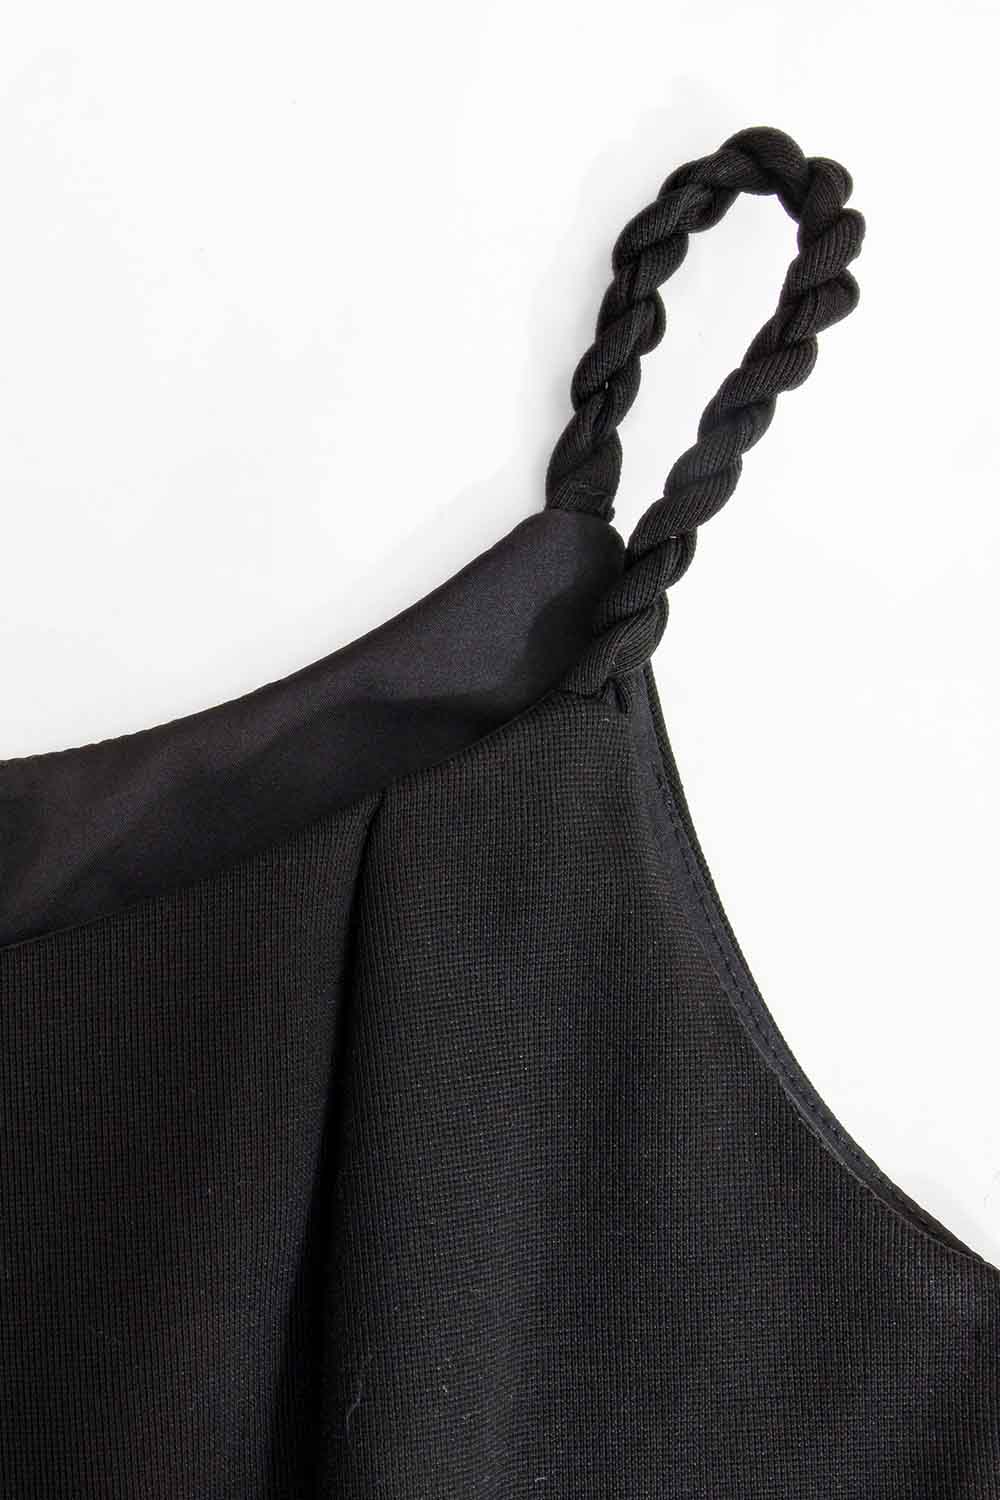 Sleek Black A-Line Dress with Braided Straps - Versatile Evening Wear